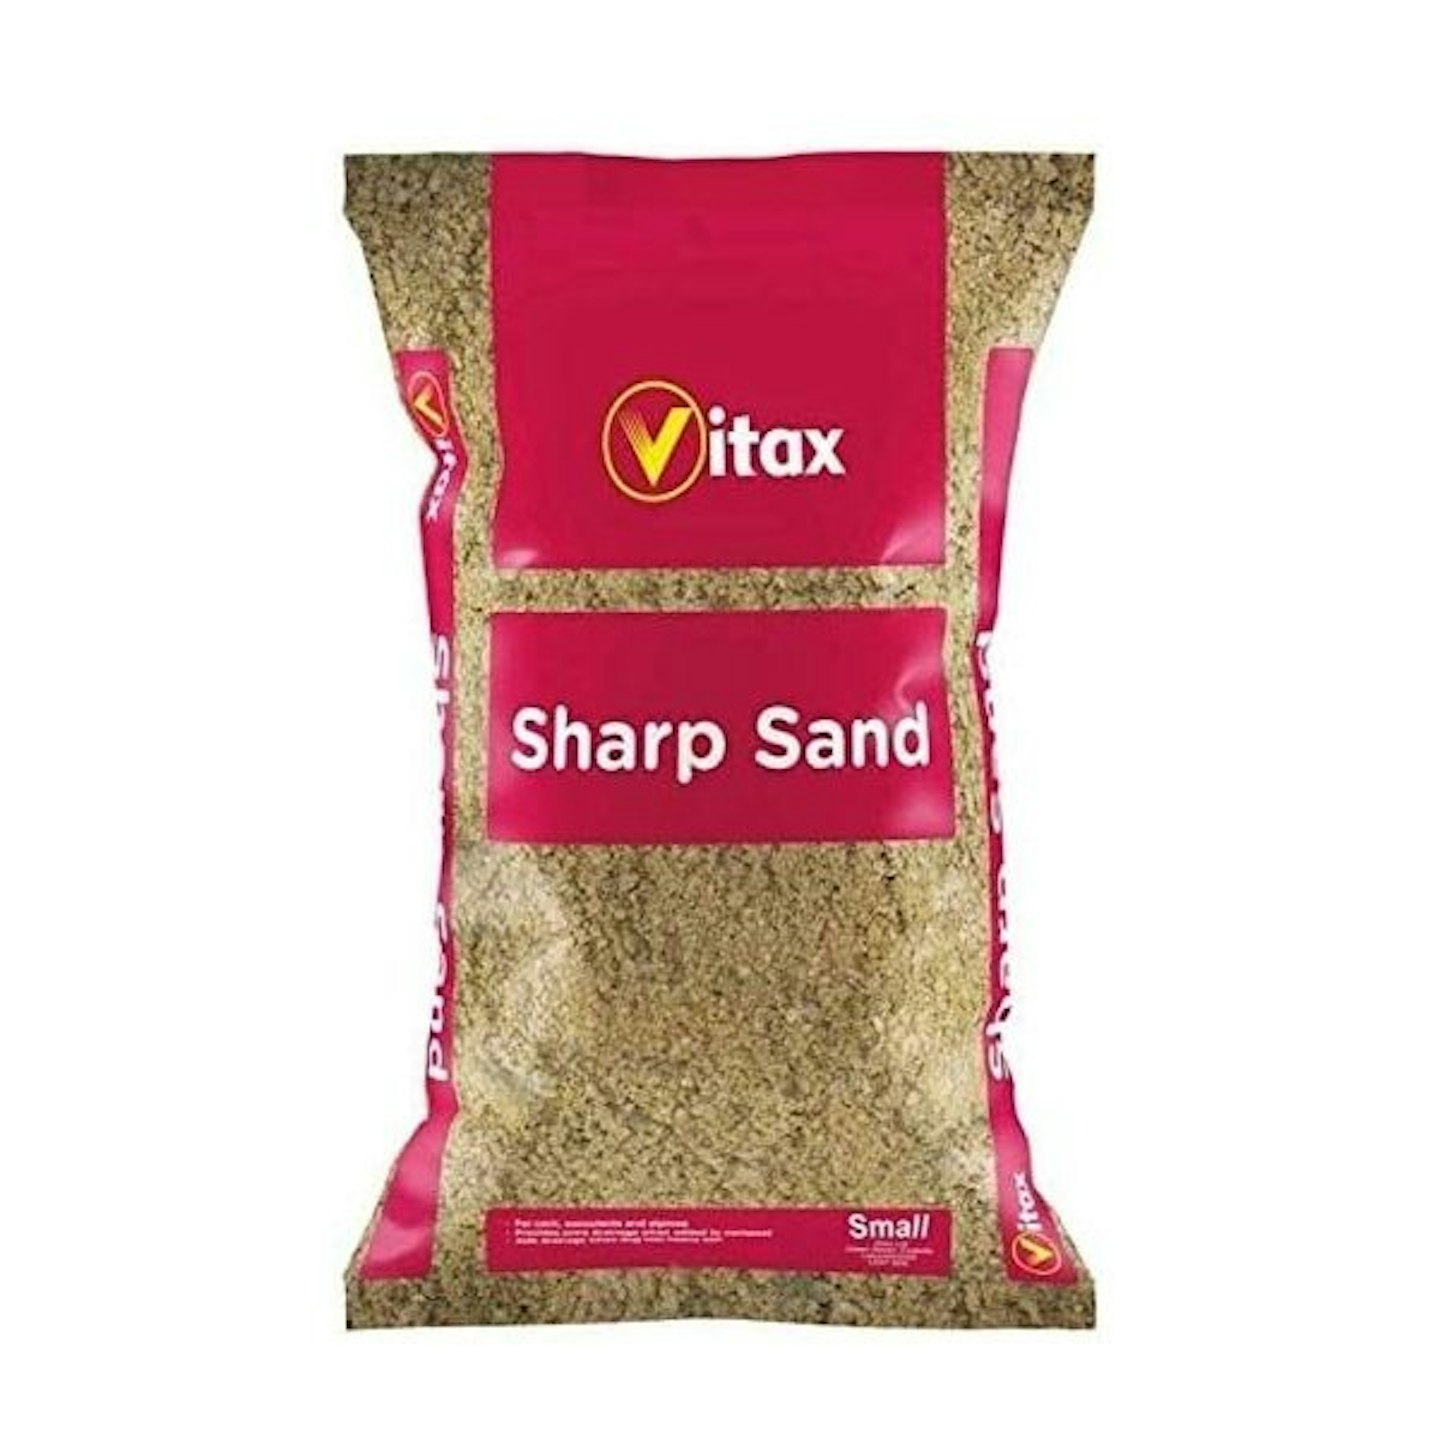 Vitax Sharp Sand